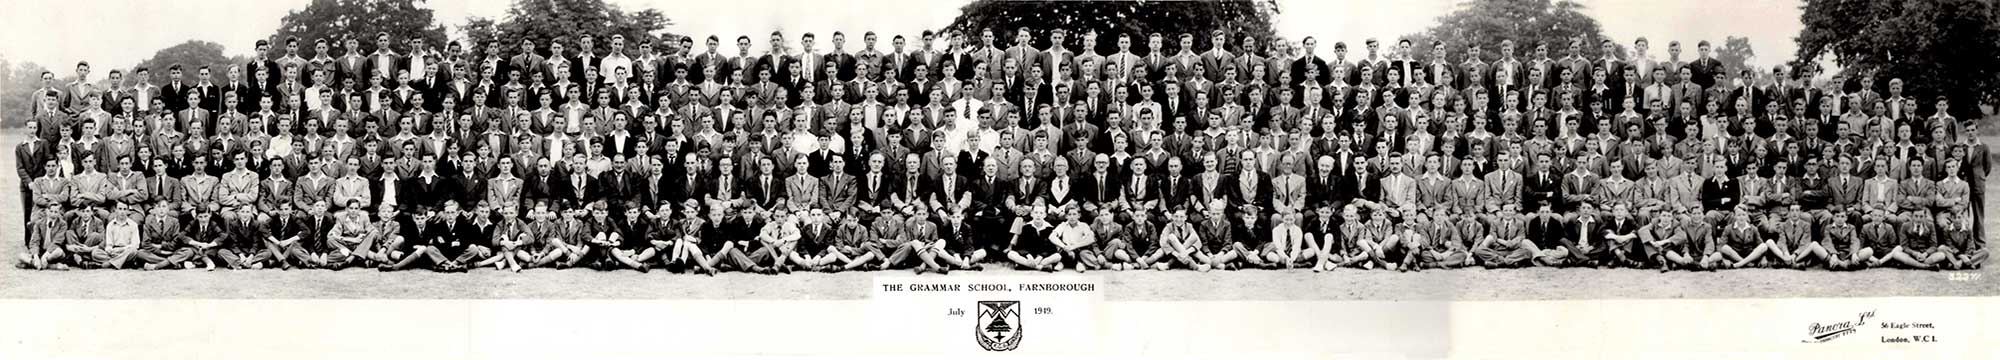 Pupils and staff panorama photo 1949